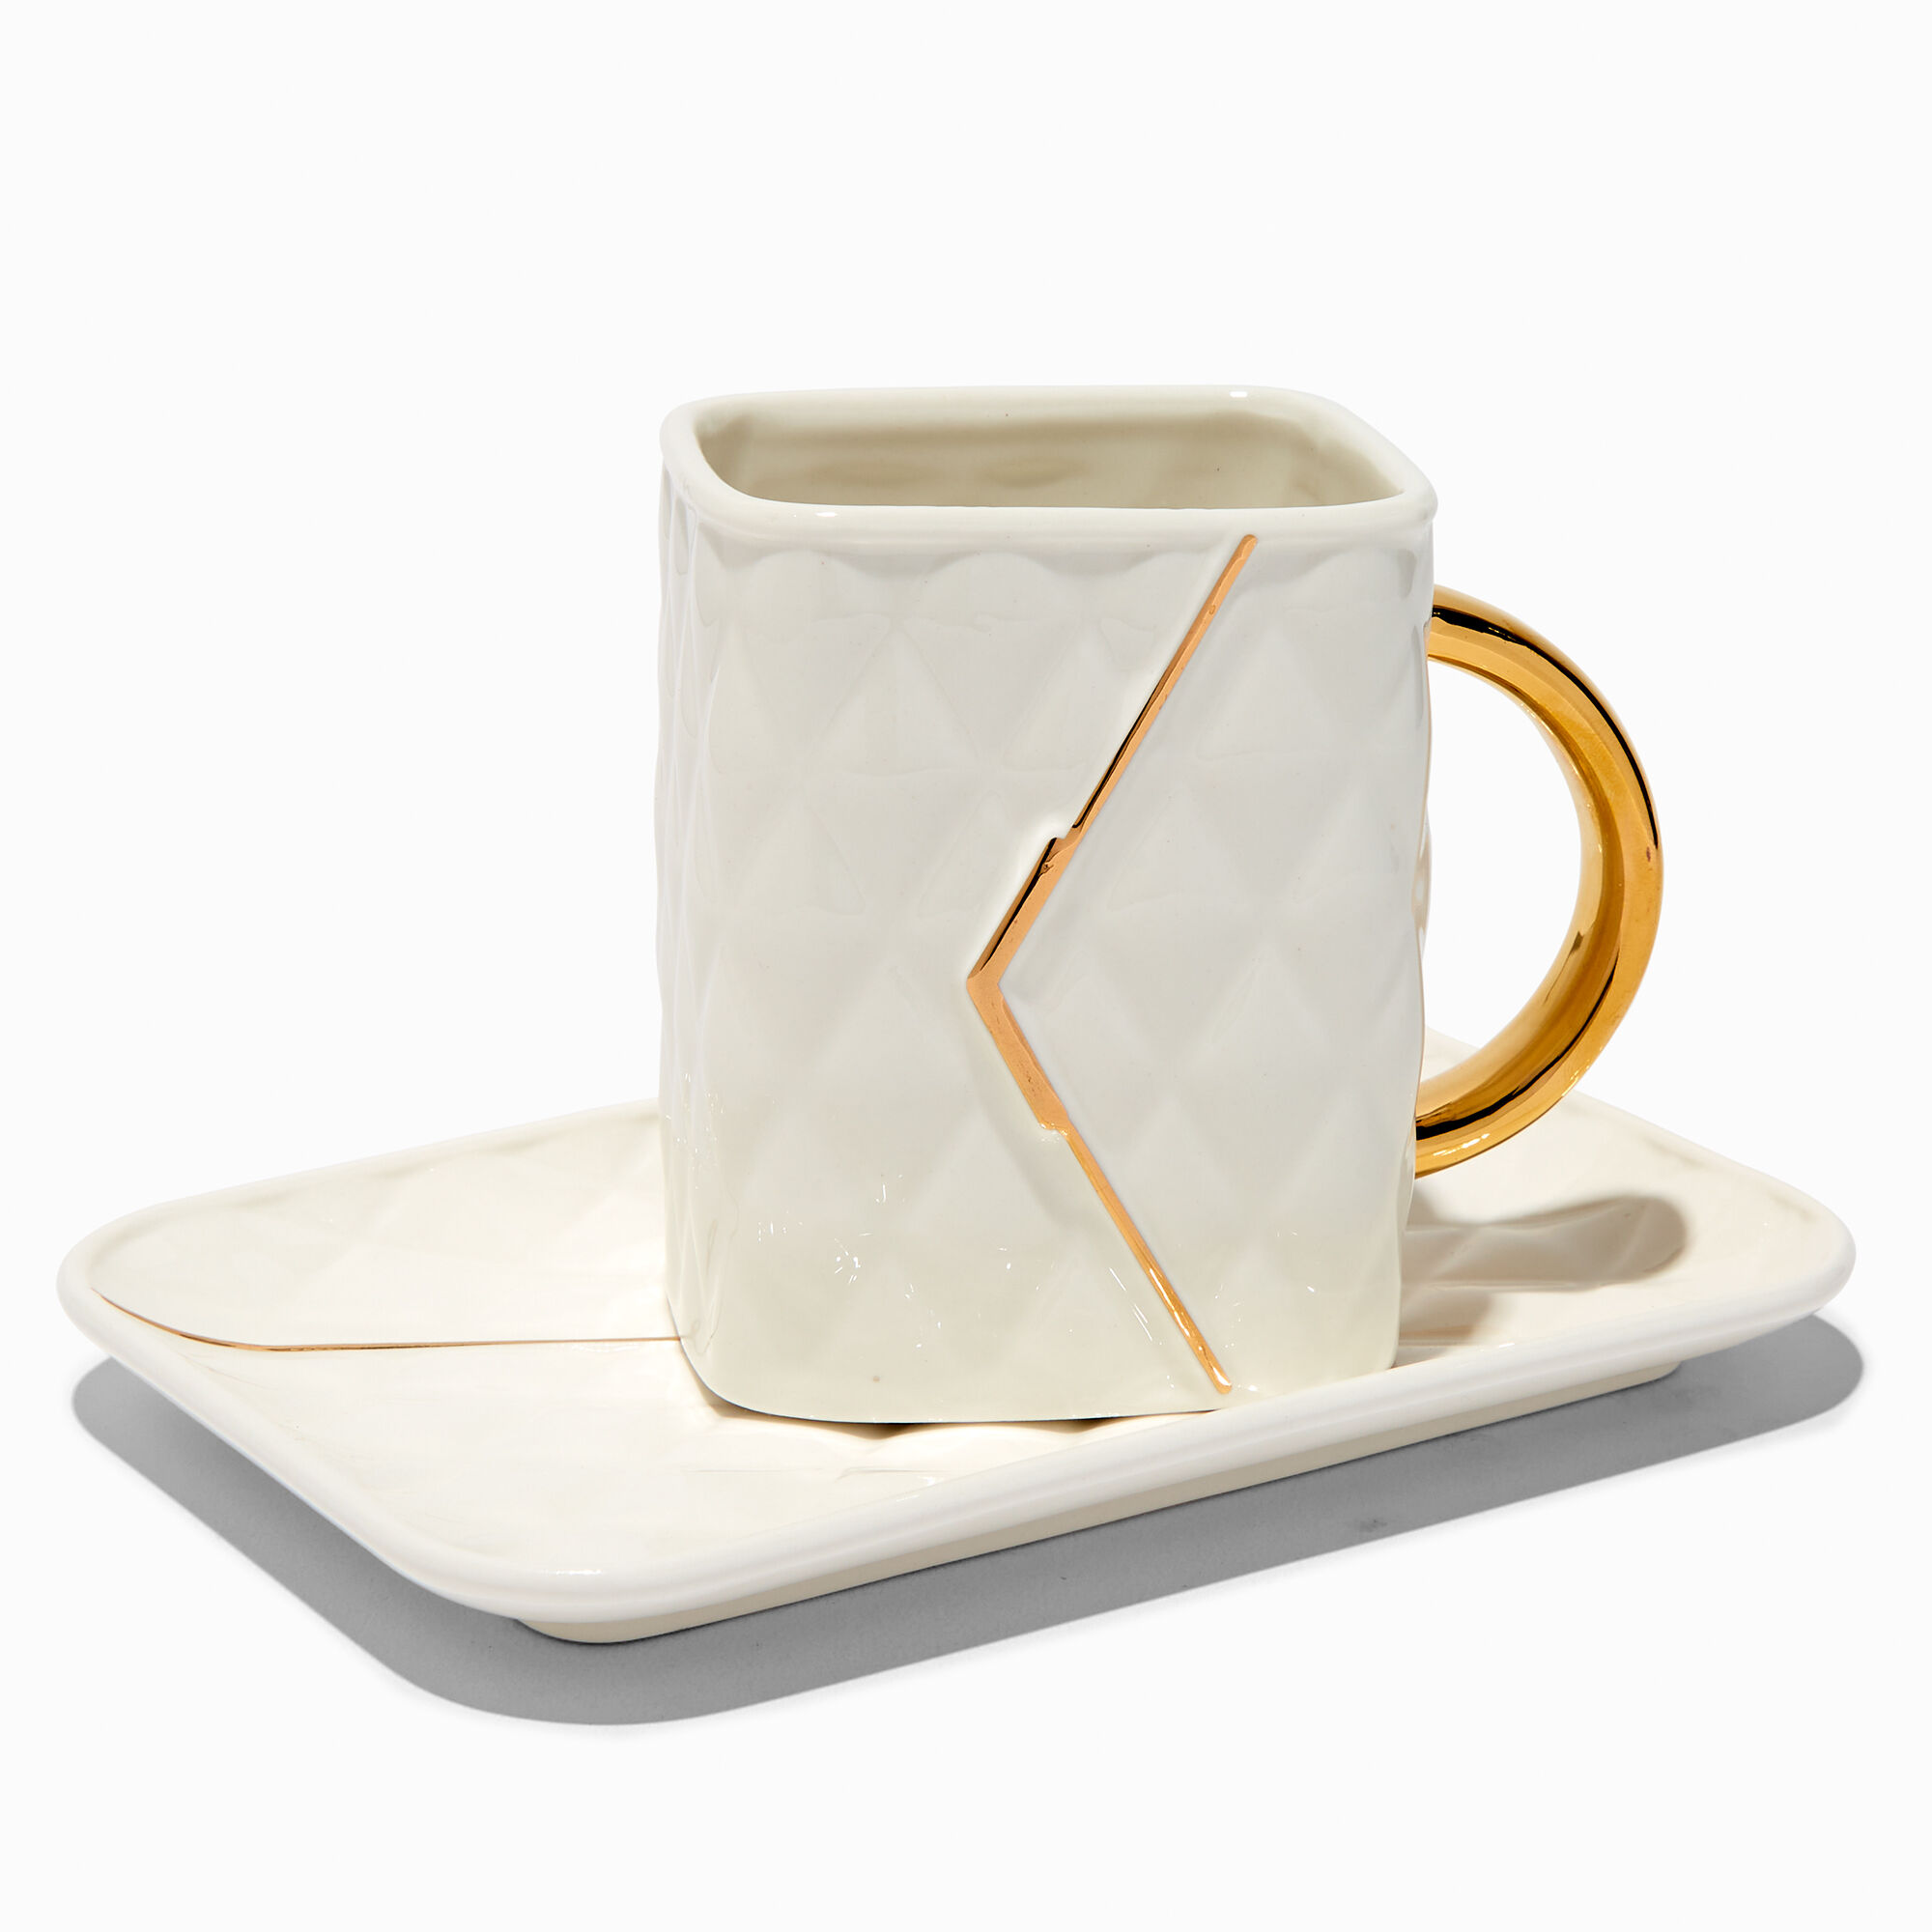 View Claires HandbagShaped Ceramic Mug Tray Set Gold information